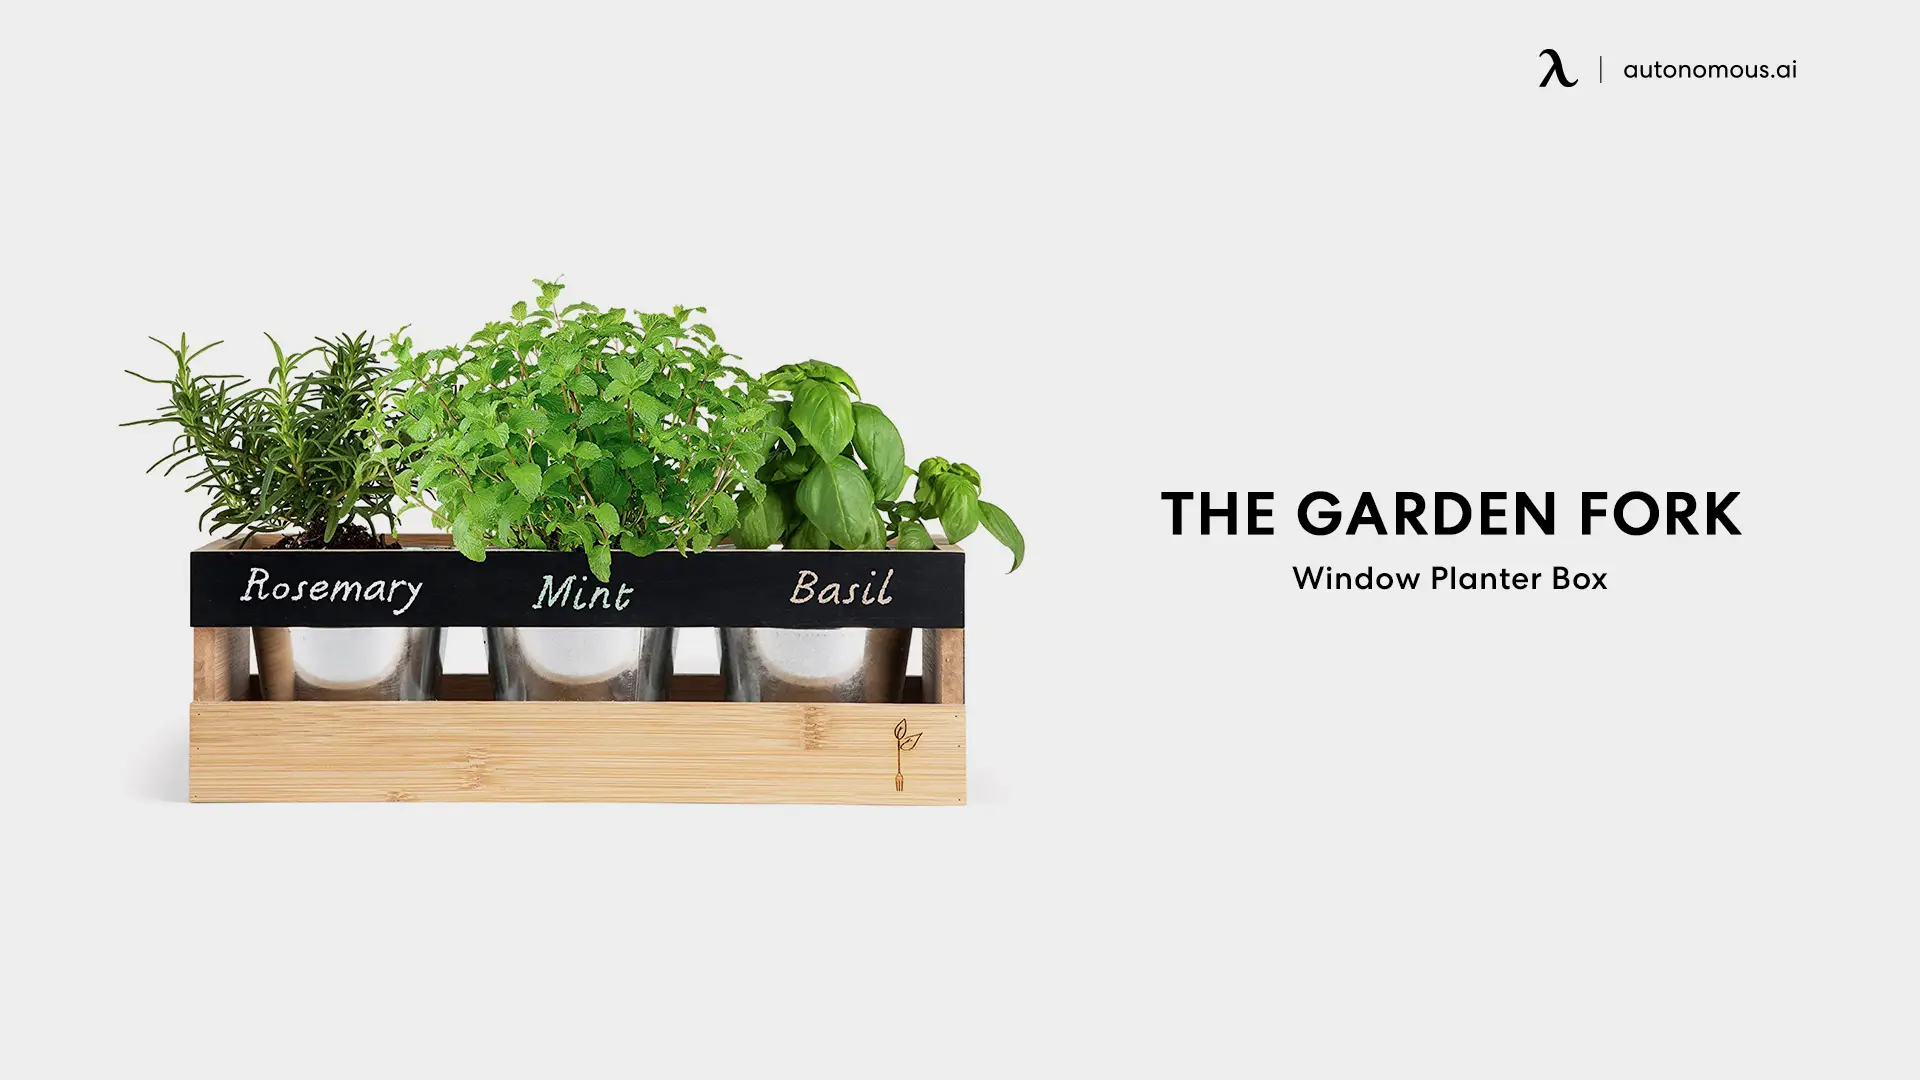 The Garden Fork Window Planter Box